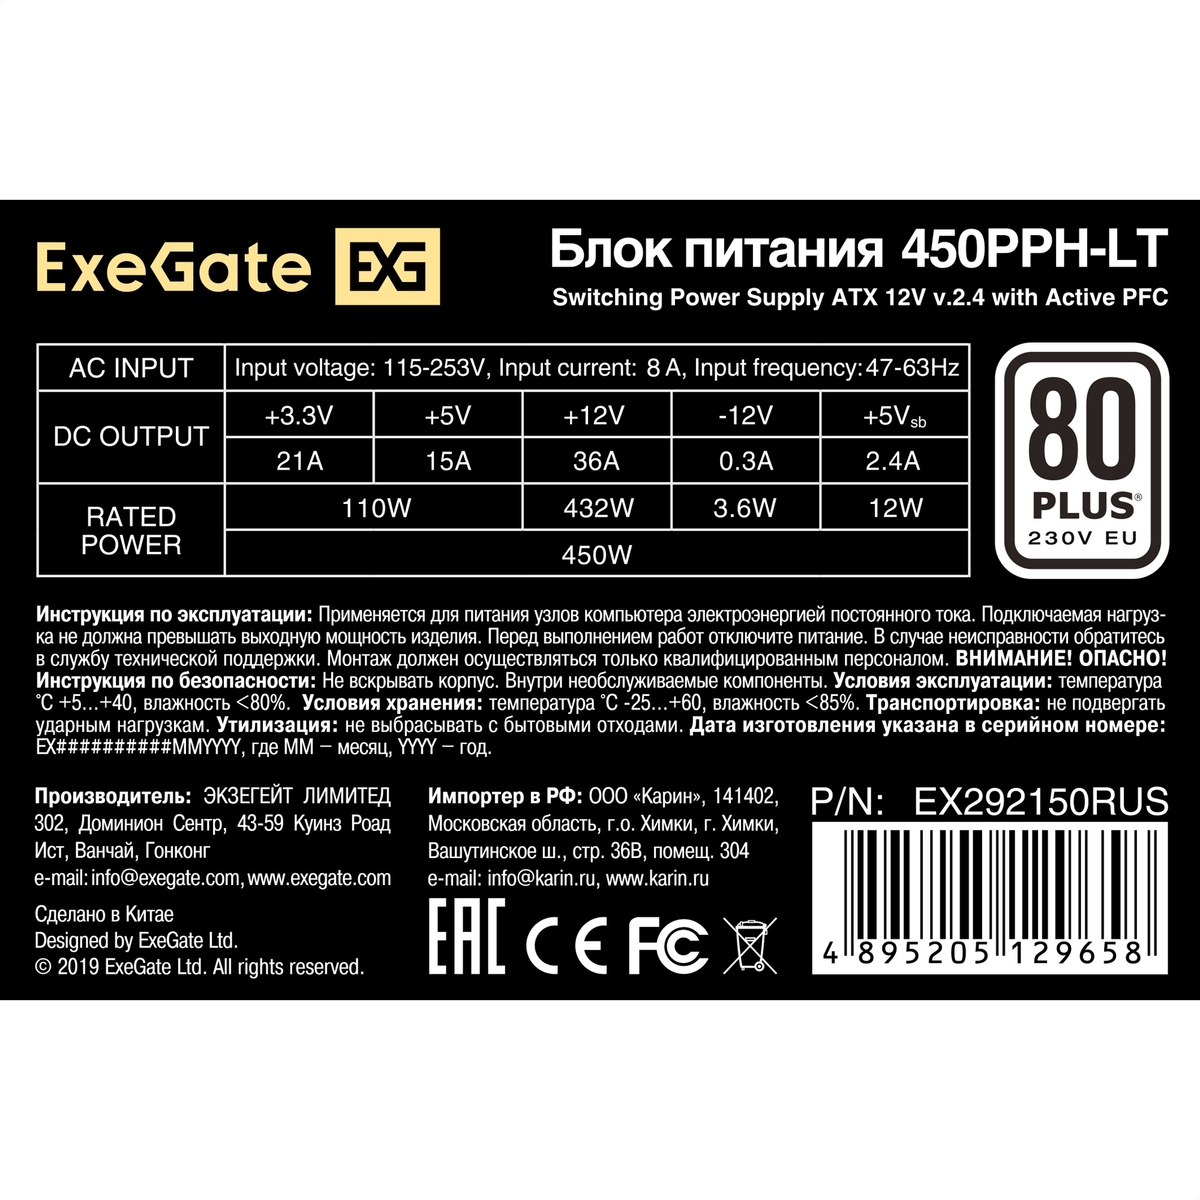 PSU 450W ExeGate 80 PLUS® 450PPH-LT